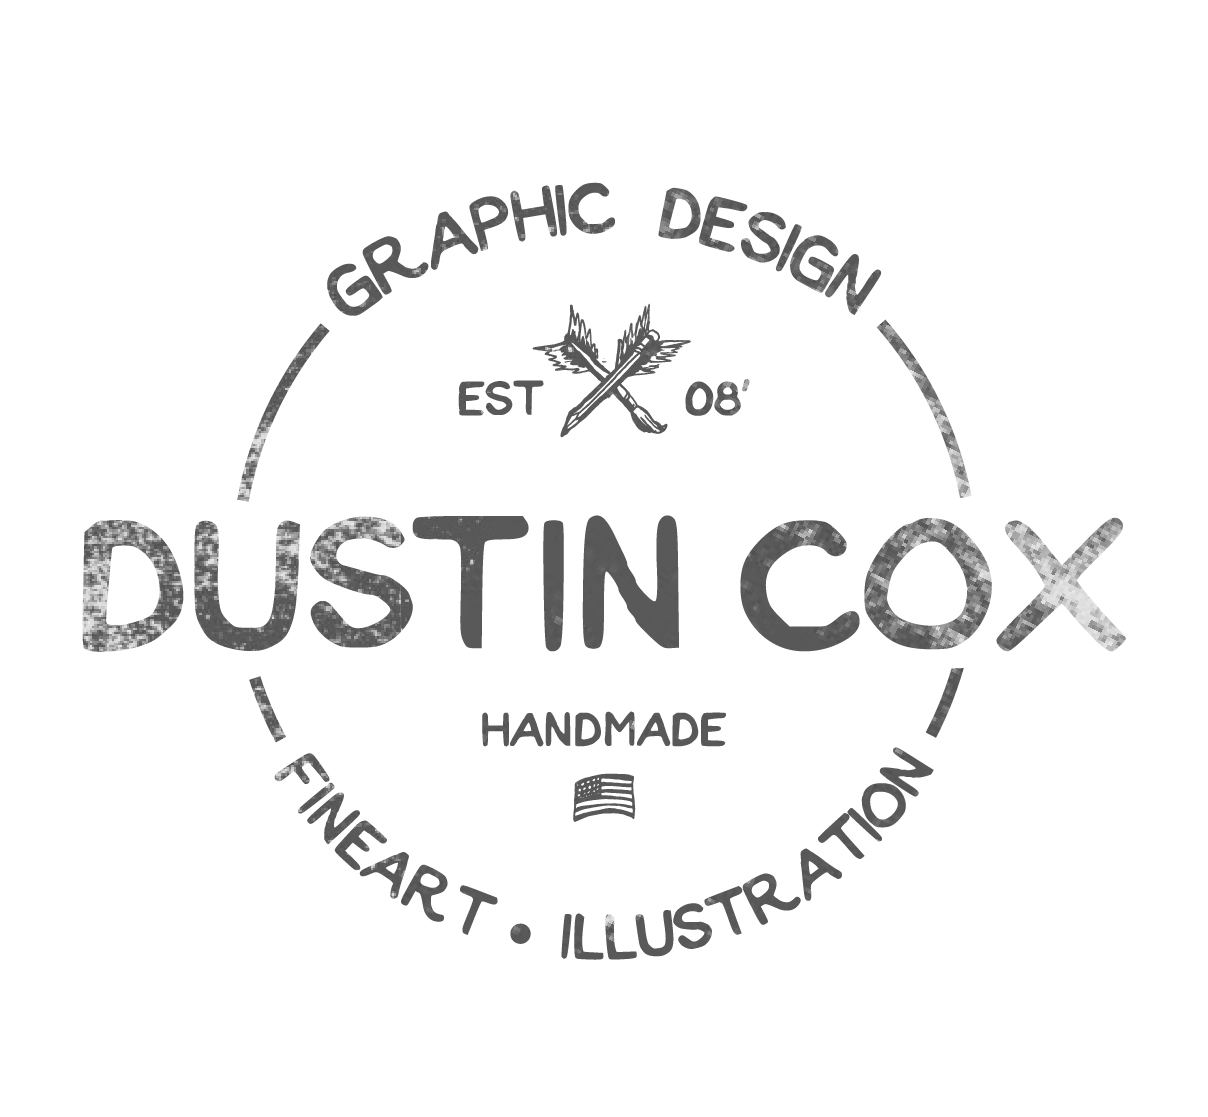 Dustin Cox Design 